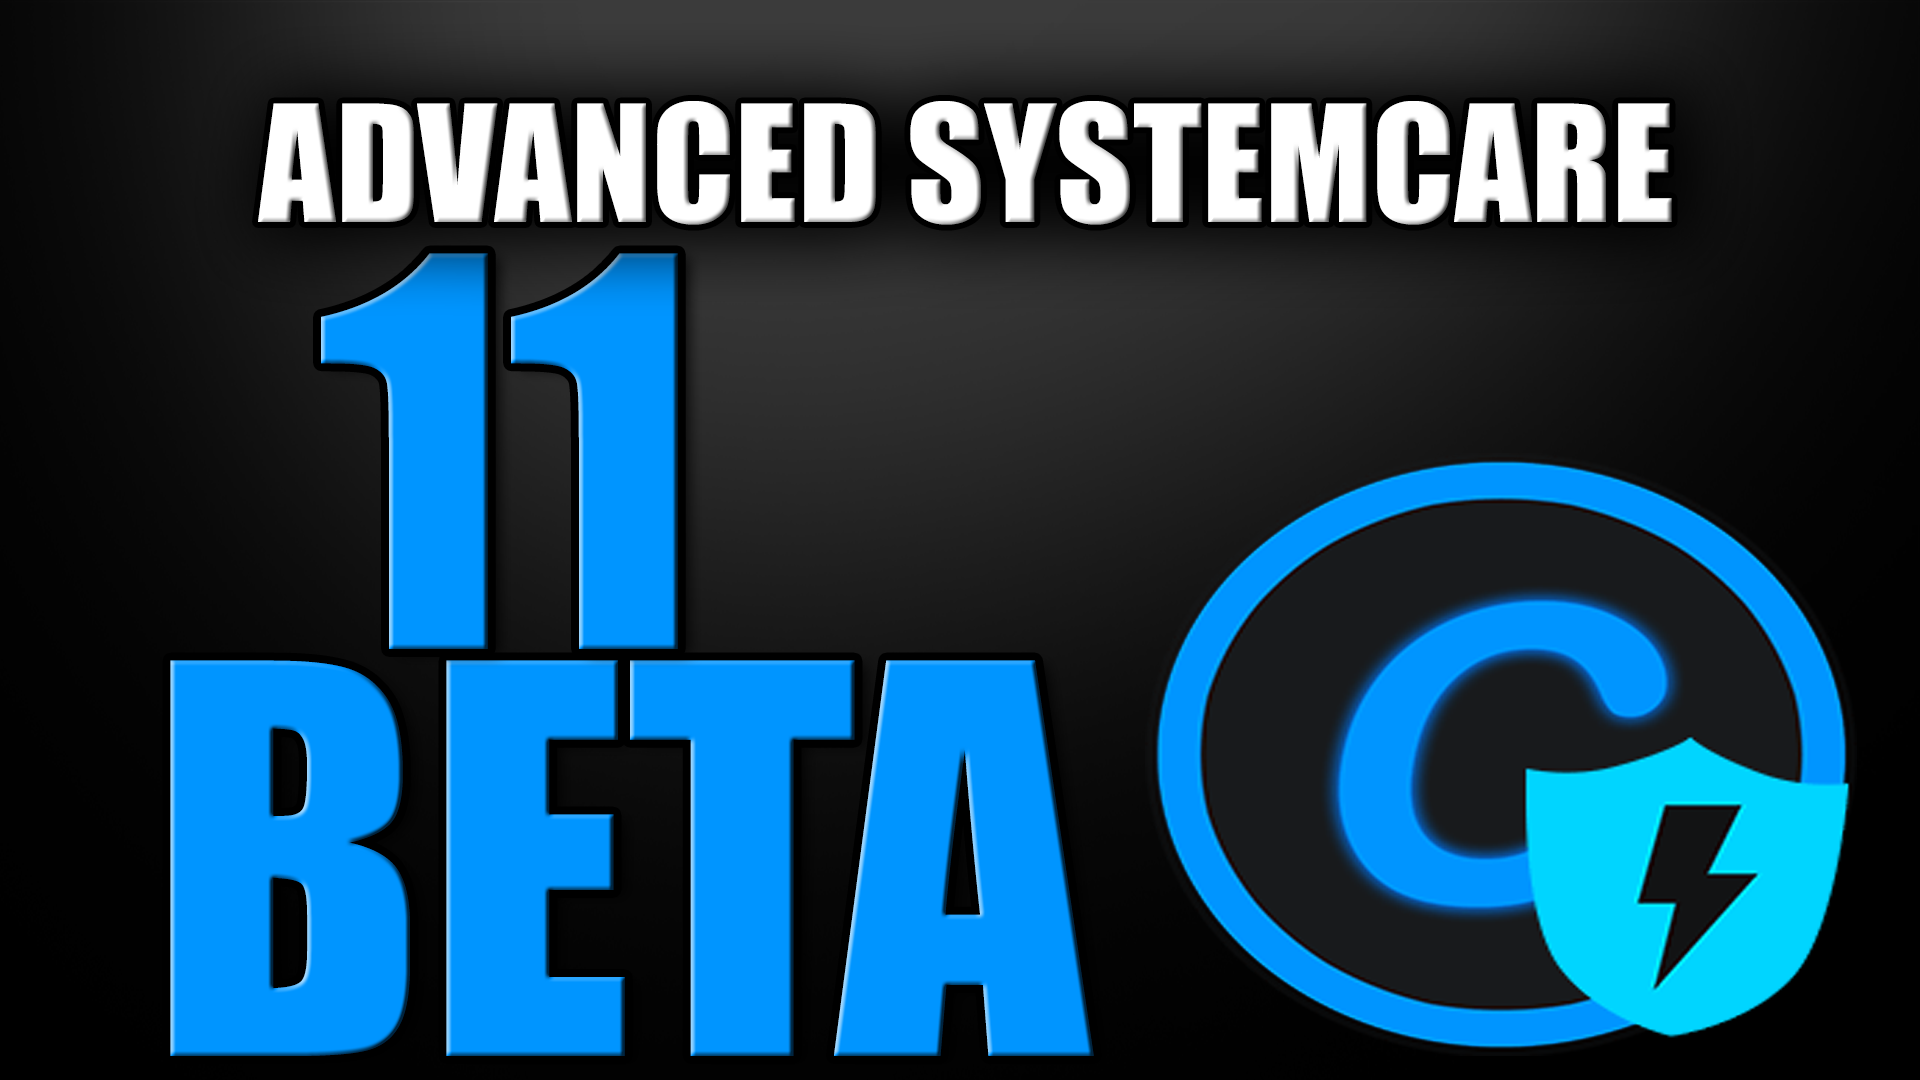 Advanced systemcare 11 beta 2.0 serial key 2018